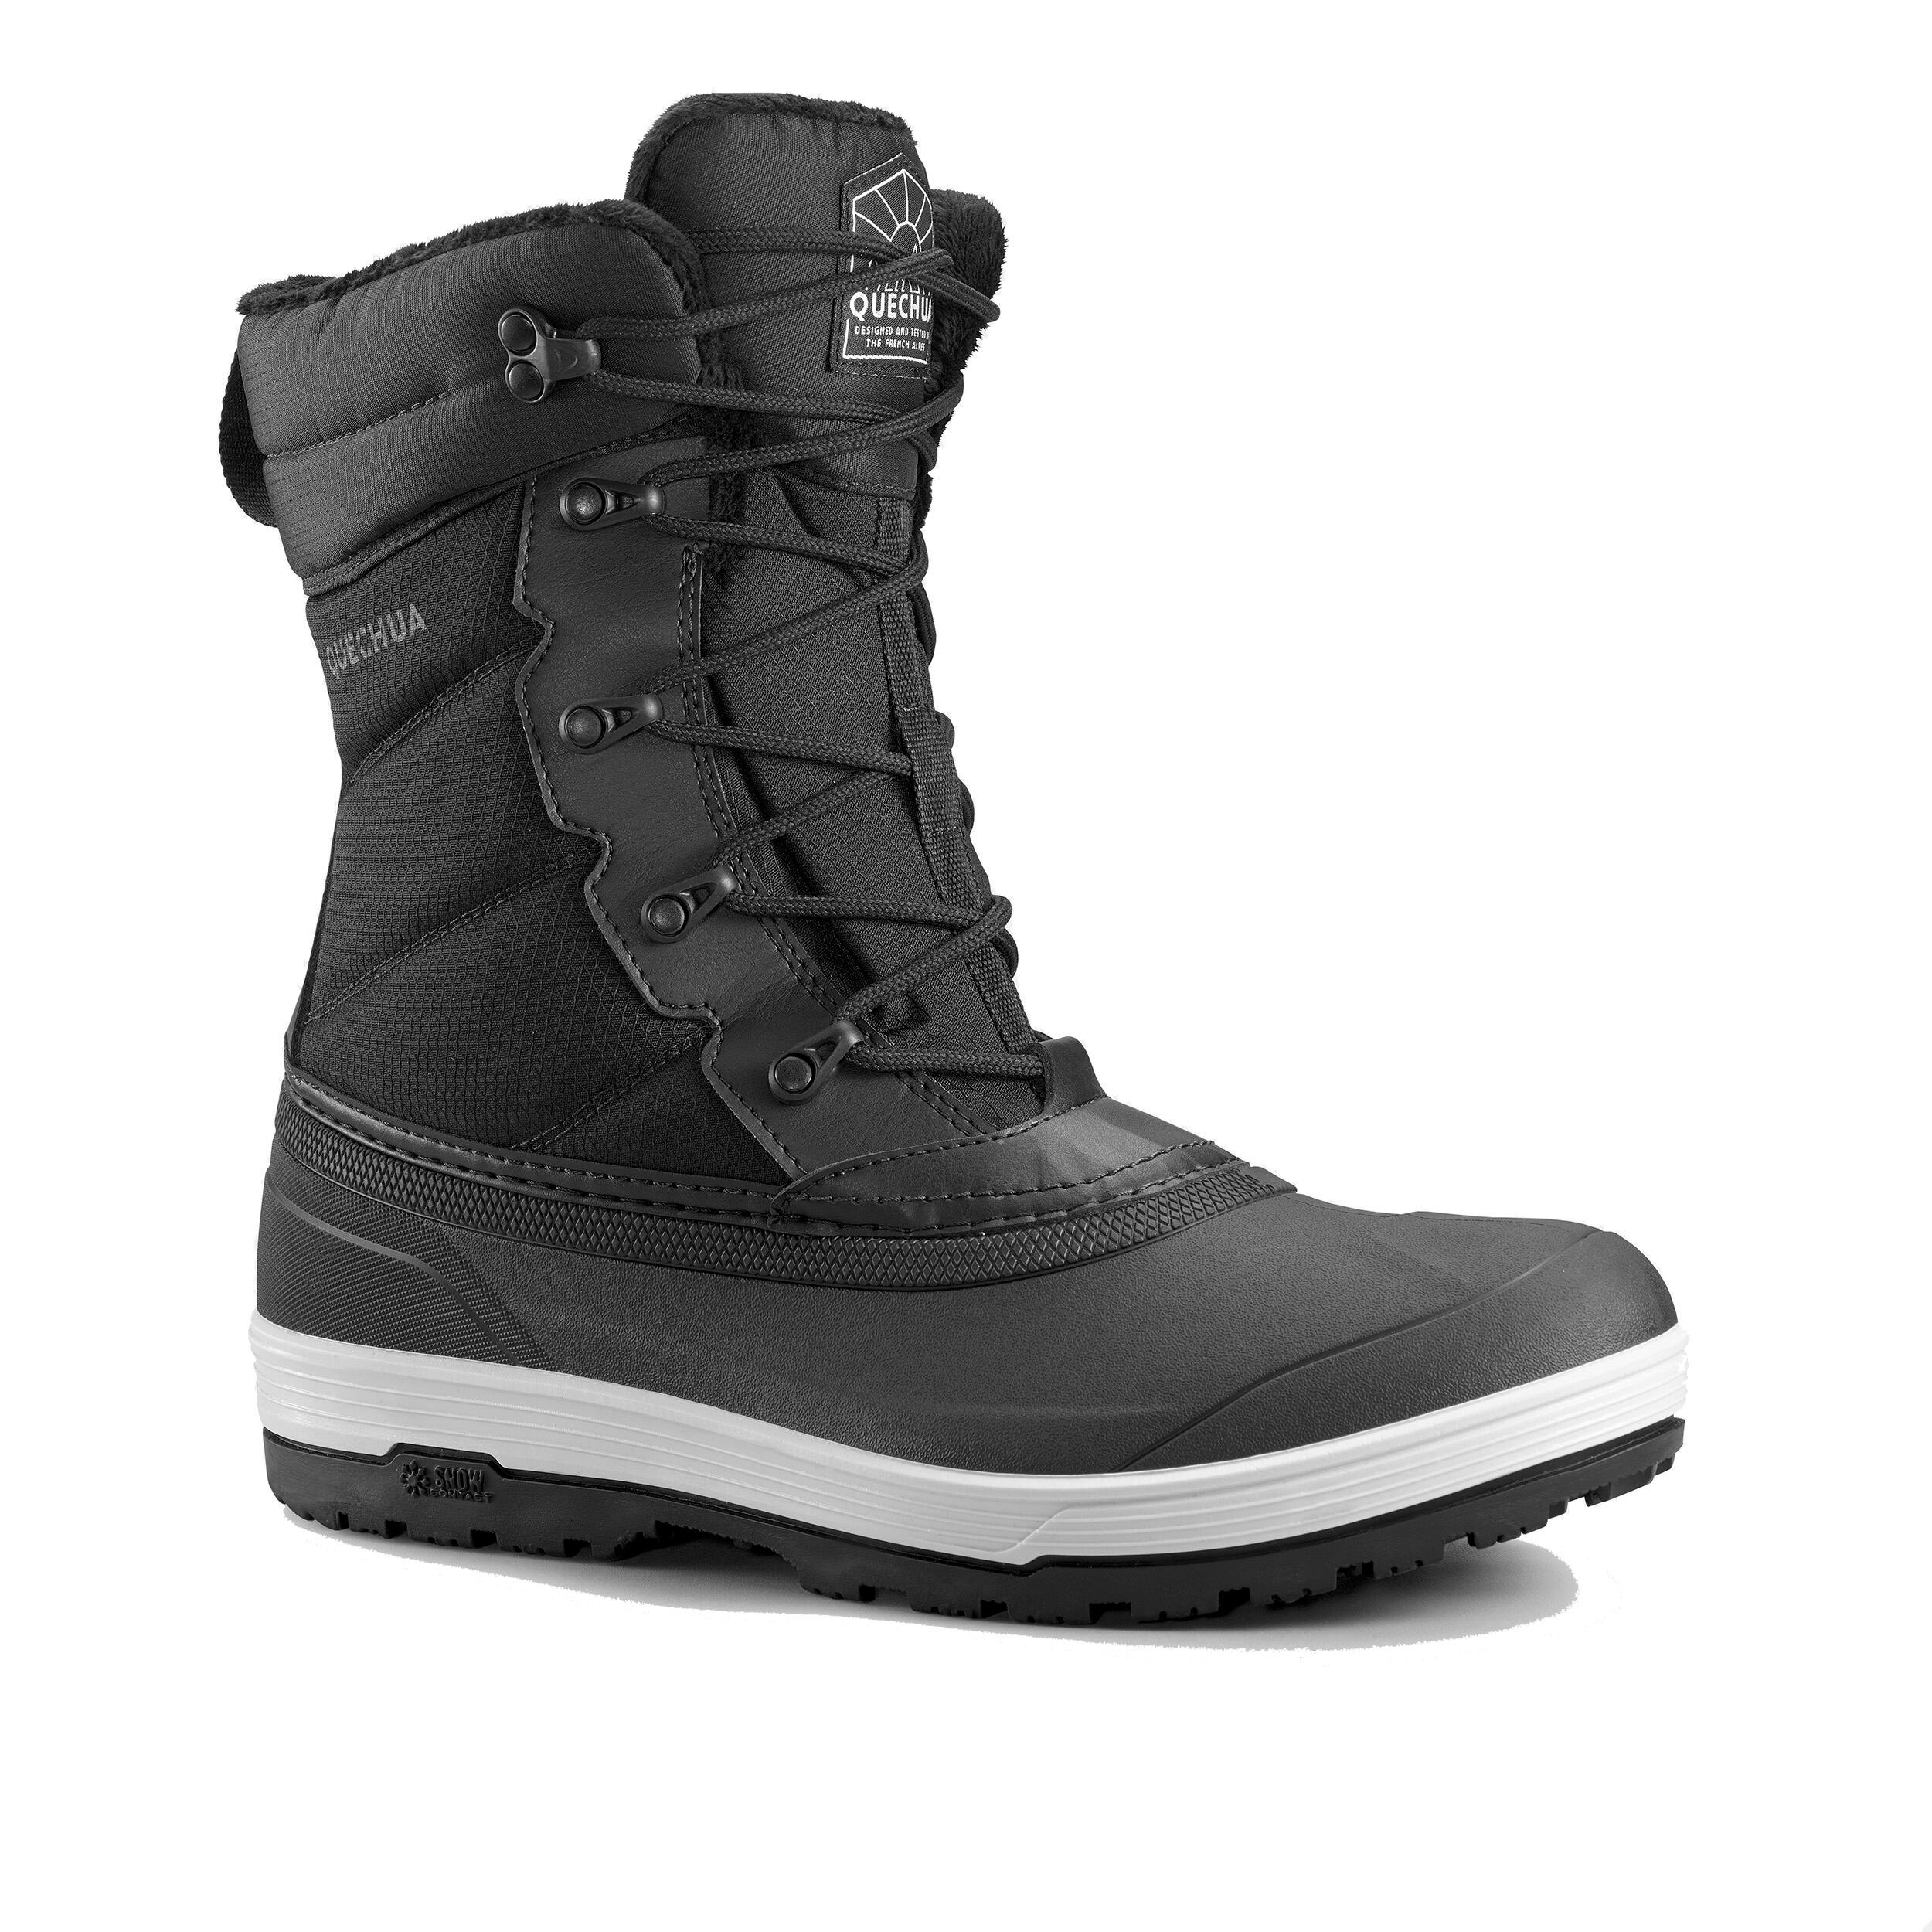 Image of Men’s Winter Boots - SH 500 Black